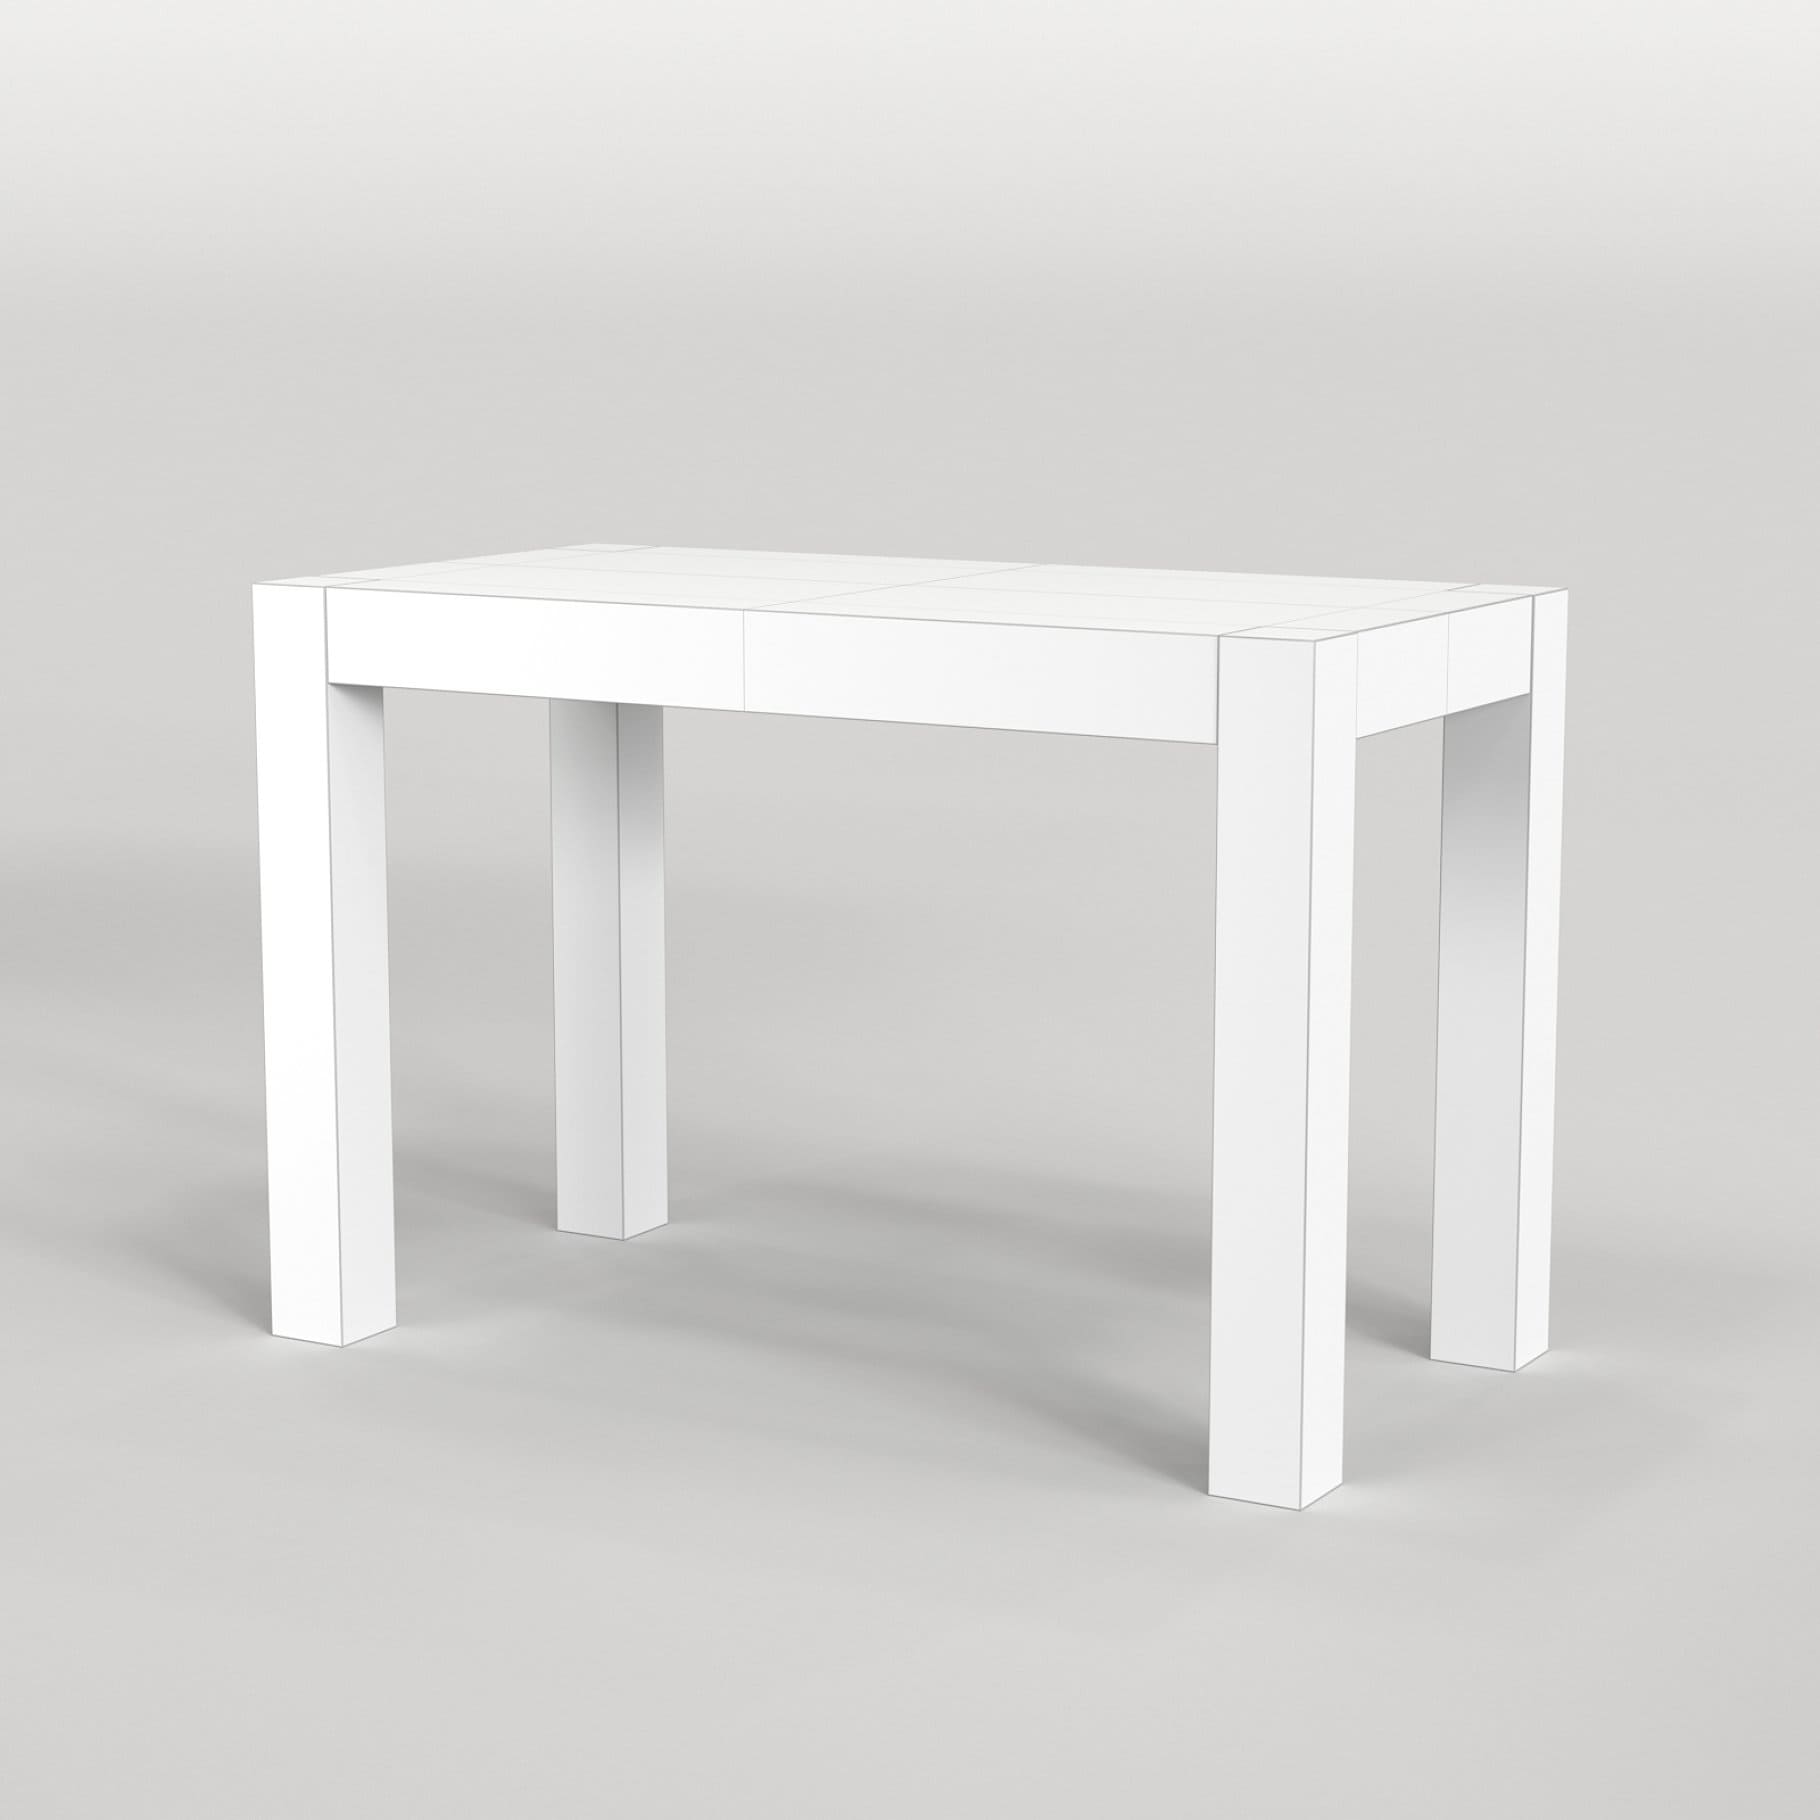 3D model Scandinavian desk on a light gray background.